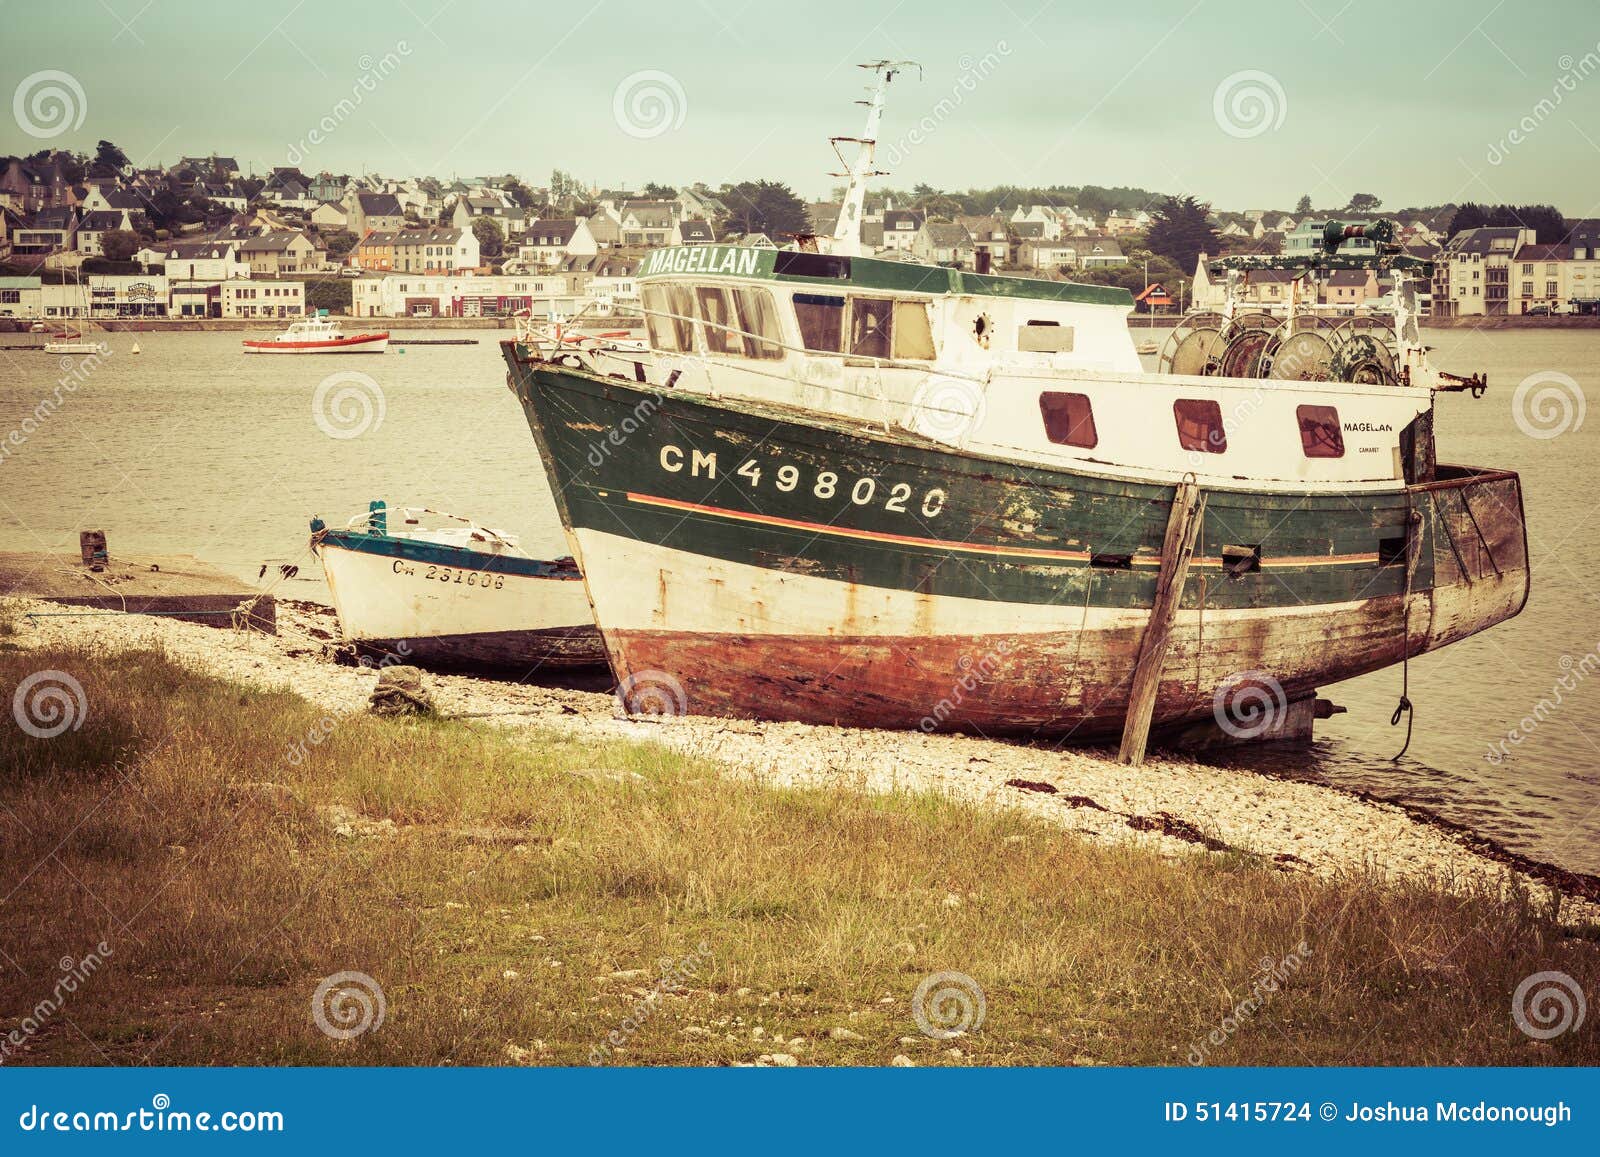 https://thumbs.dreamstime.com/z/vintage-fishing-boat-old-abandoned-moored-beach-france-51415724.jpg